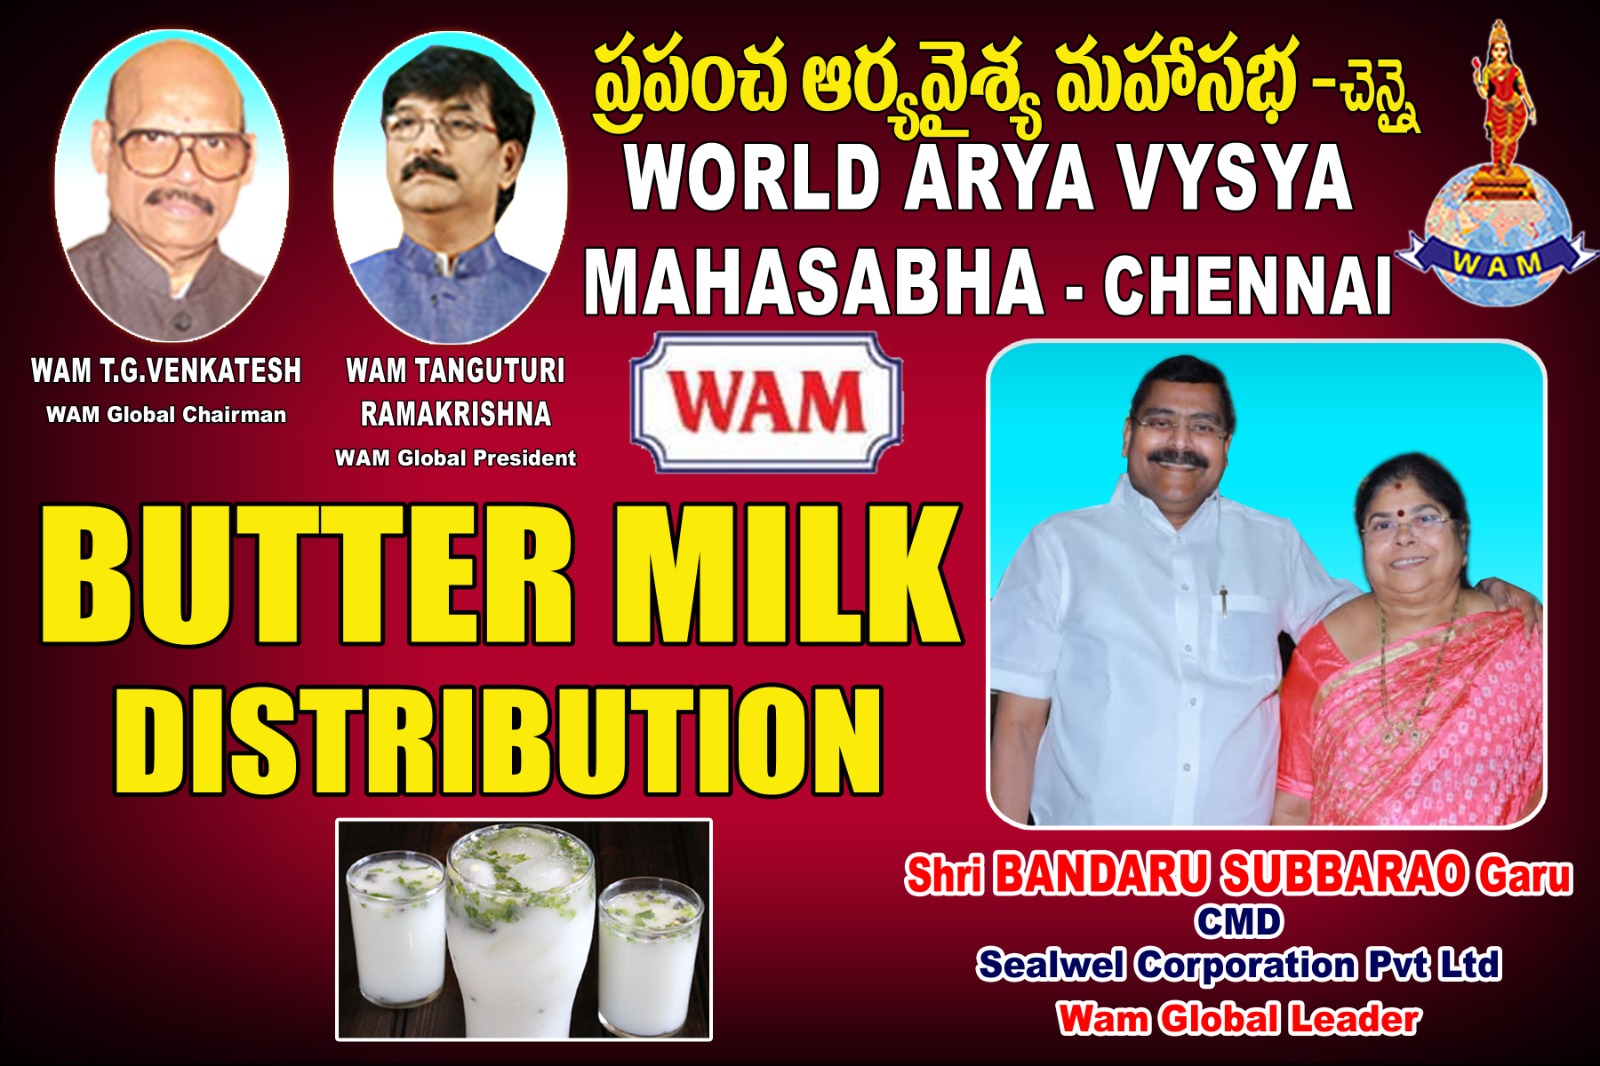 Vasavi Foundation – TN News – Distribution of Butter-milk by WAM